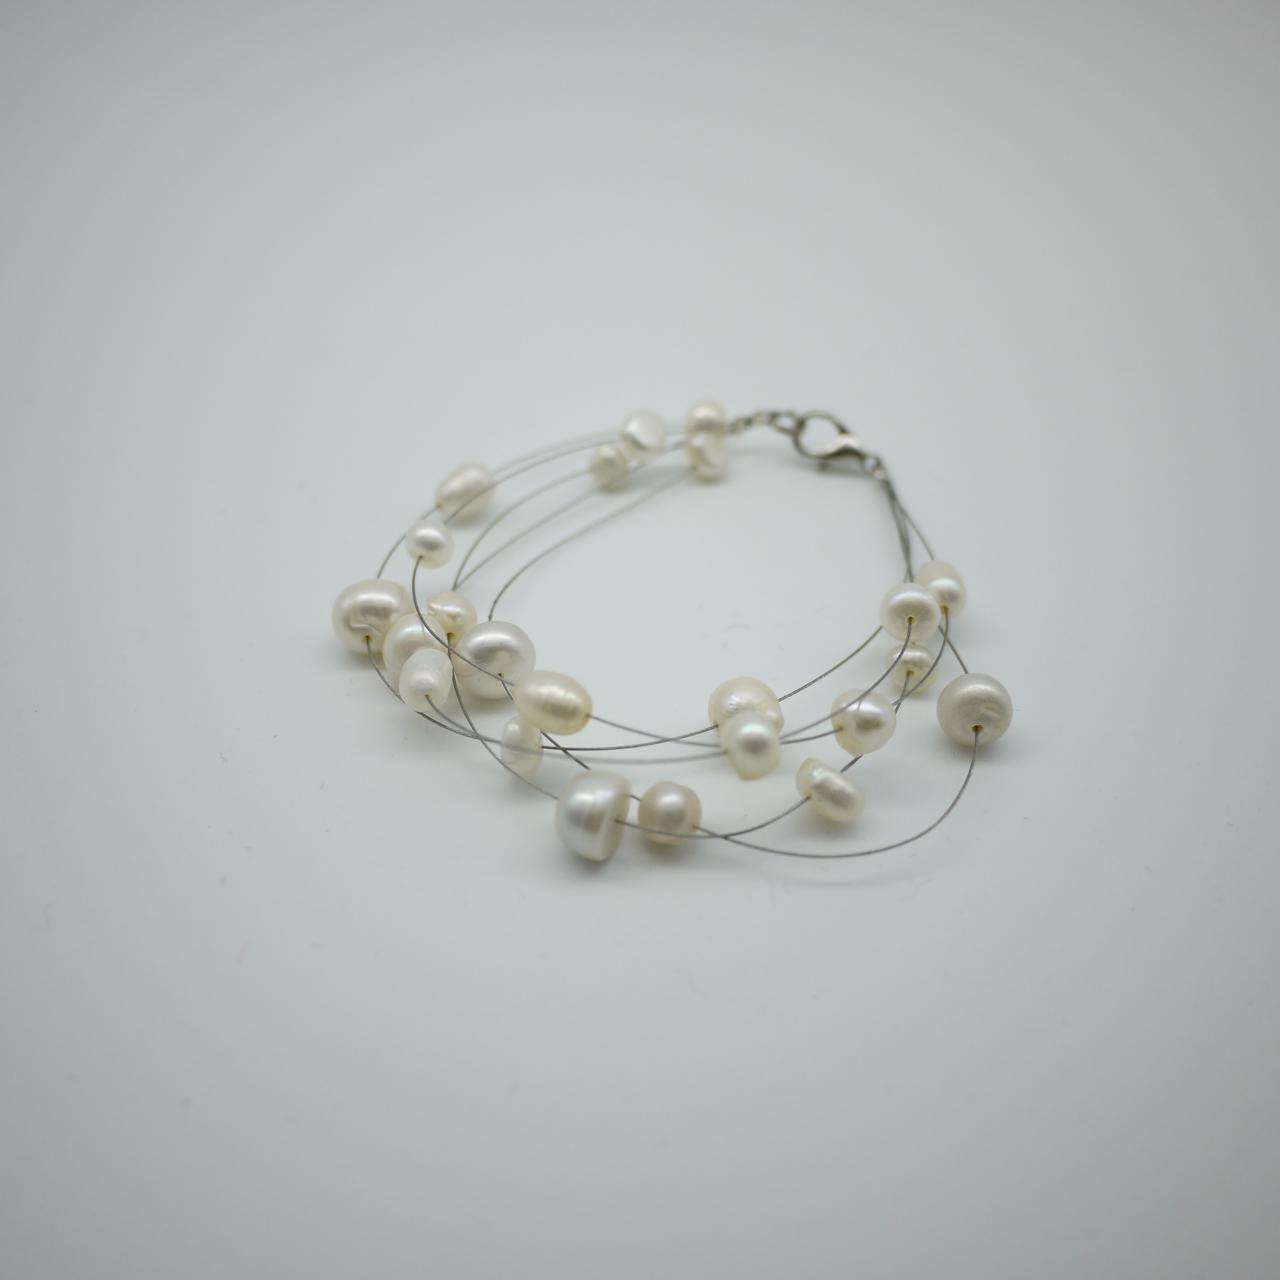 Simply Bracelet - Freshwater Pearl Bracelet - White Pearl